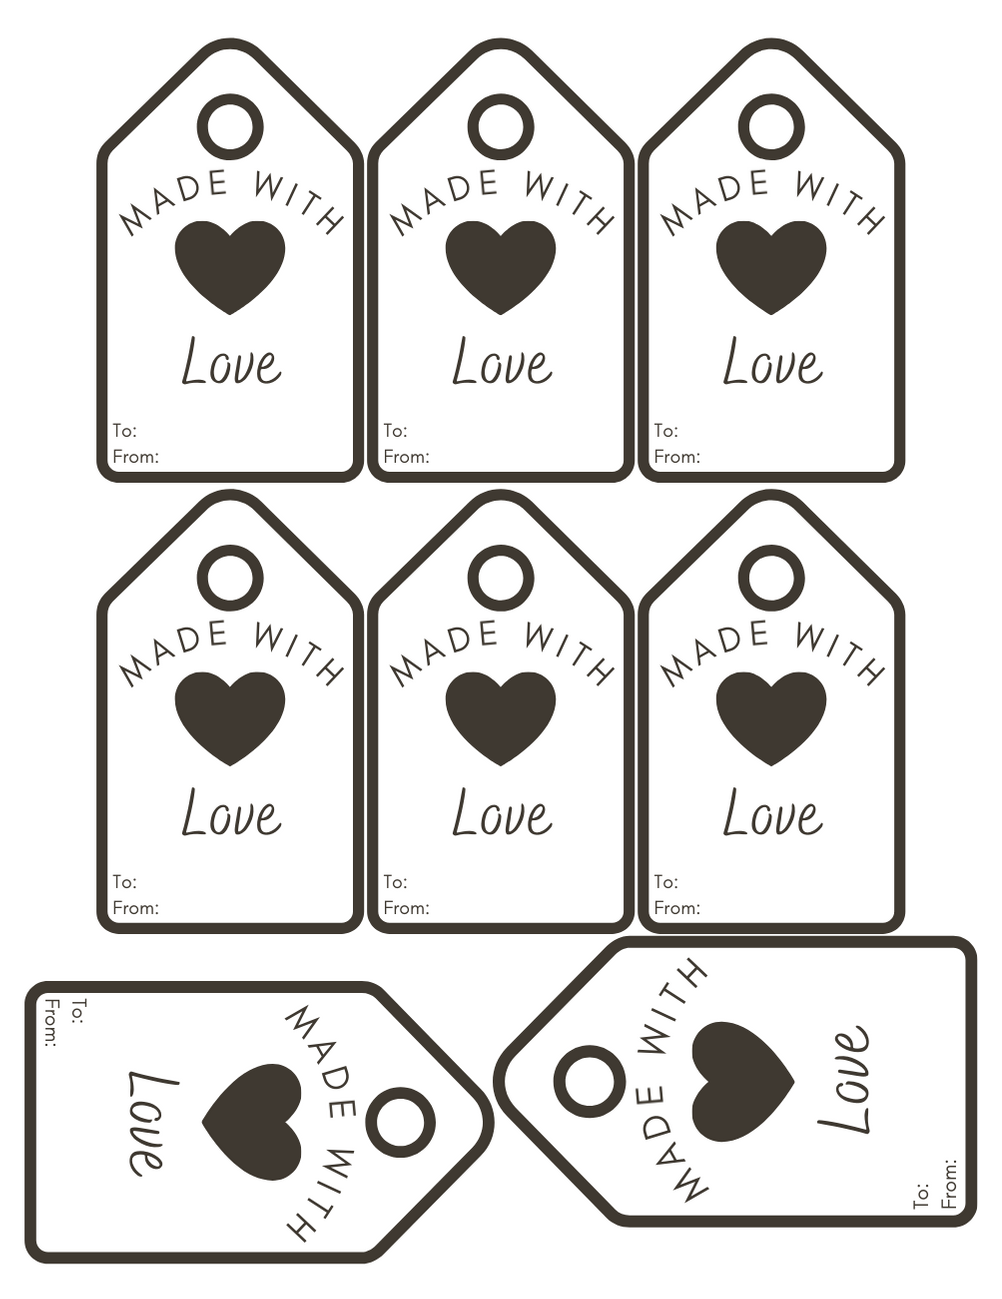 Free Printable Handmade with Love Gift Tags - Kara Creates